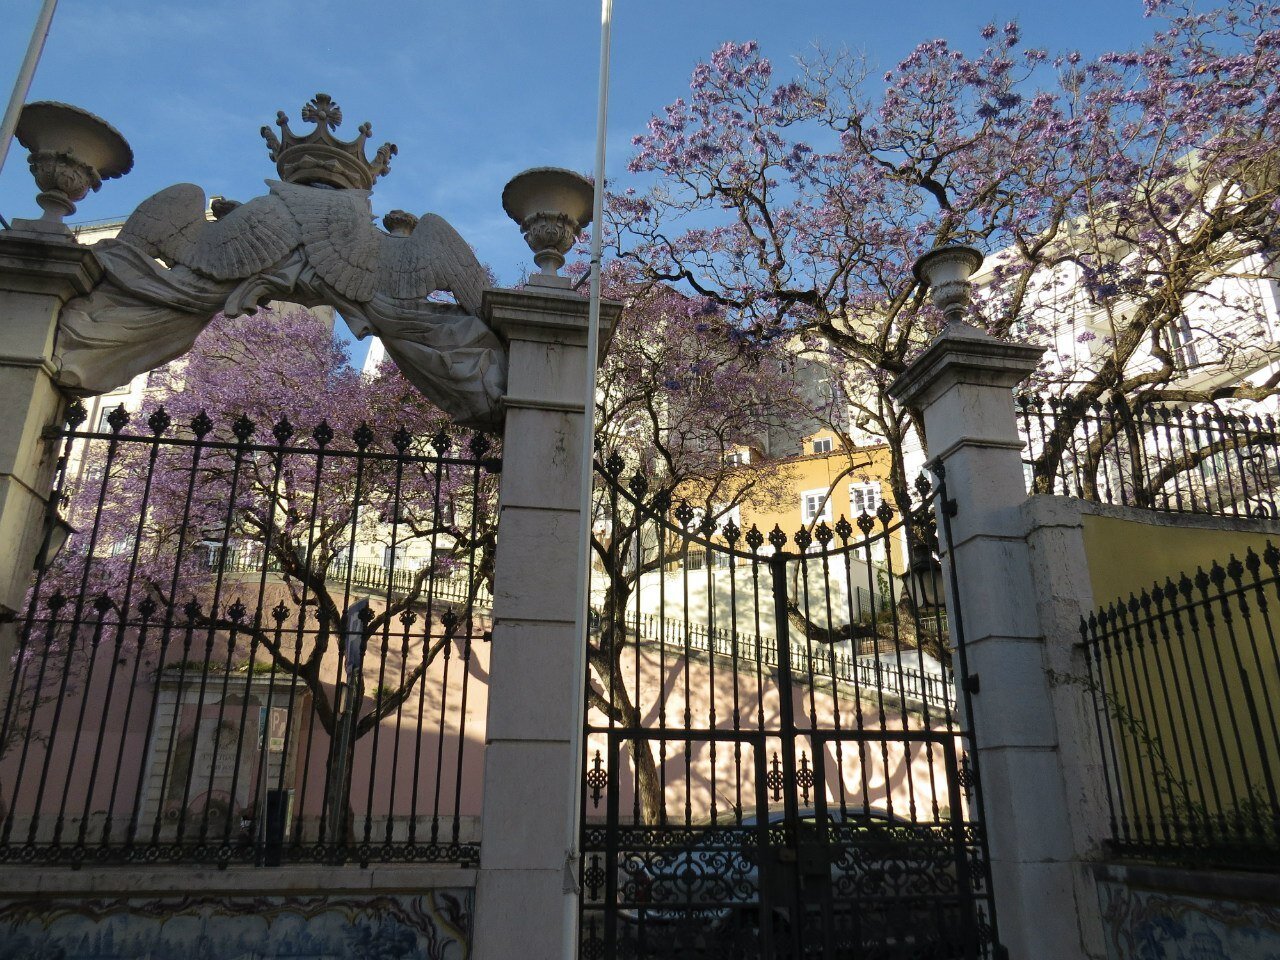 Jacaranda blossoms in Lisbon